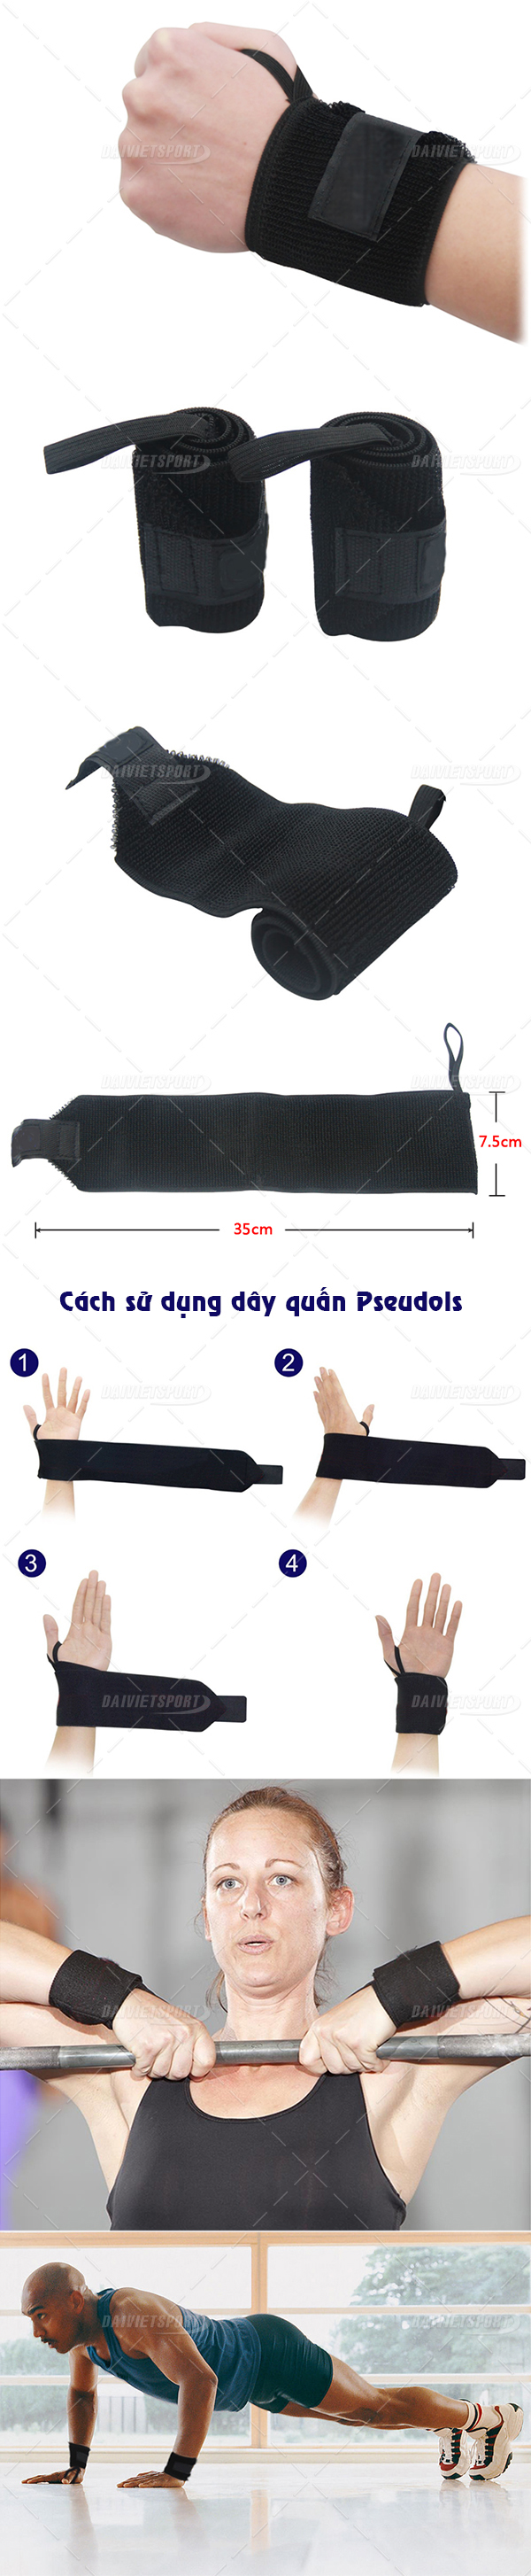 dây quấn bảo vệ cổ tay Pseuodois